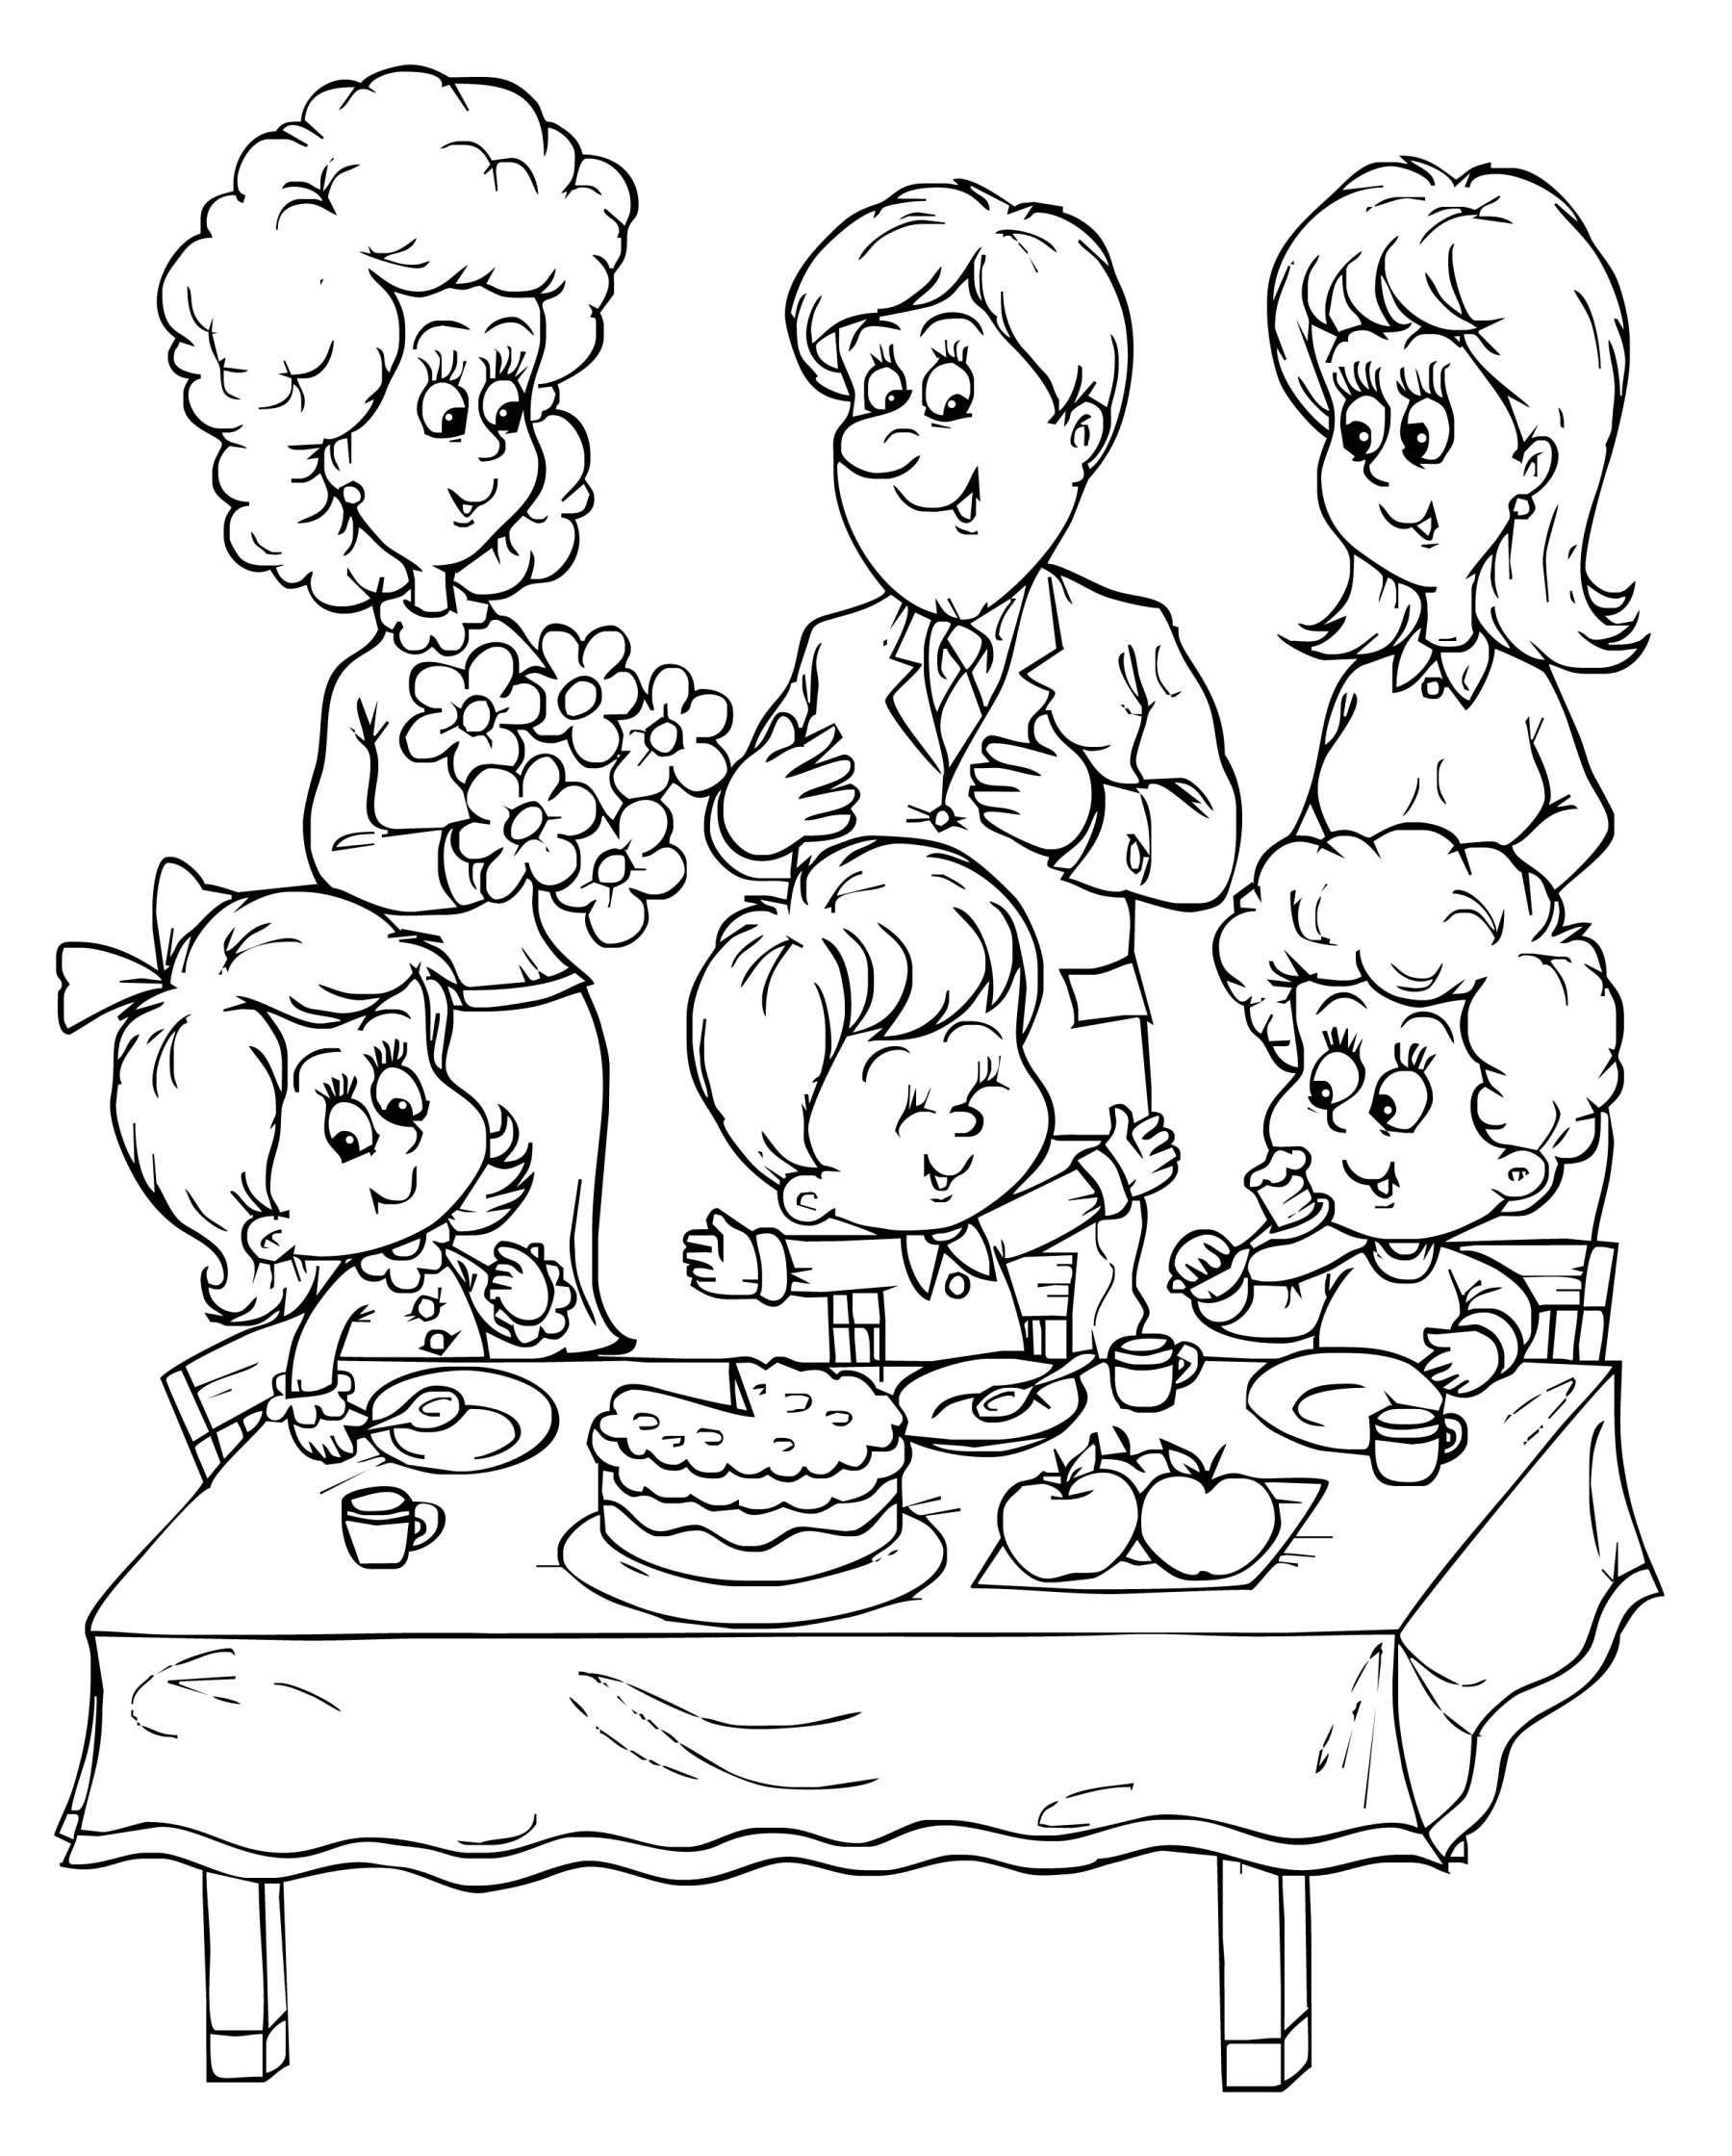 Birthday Cake Pencil Drawing at GetDrawings Free download